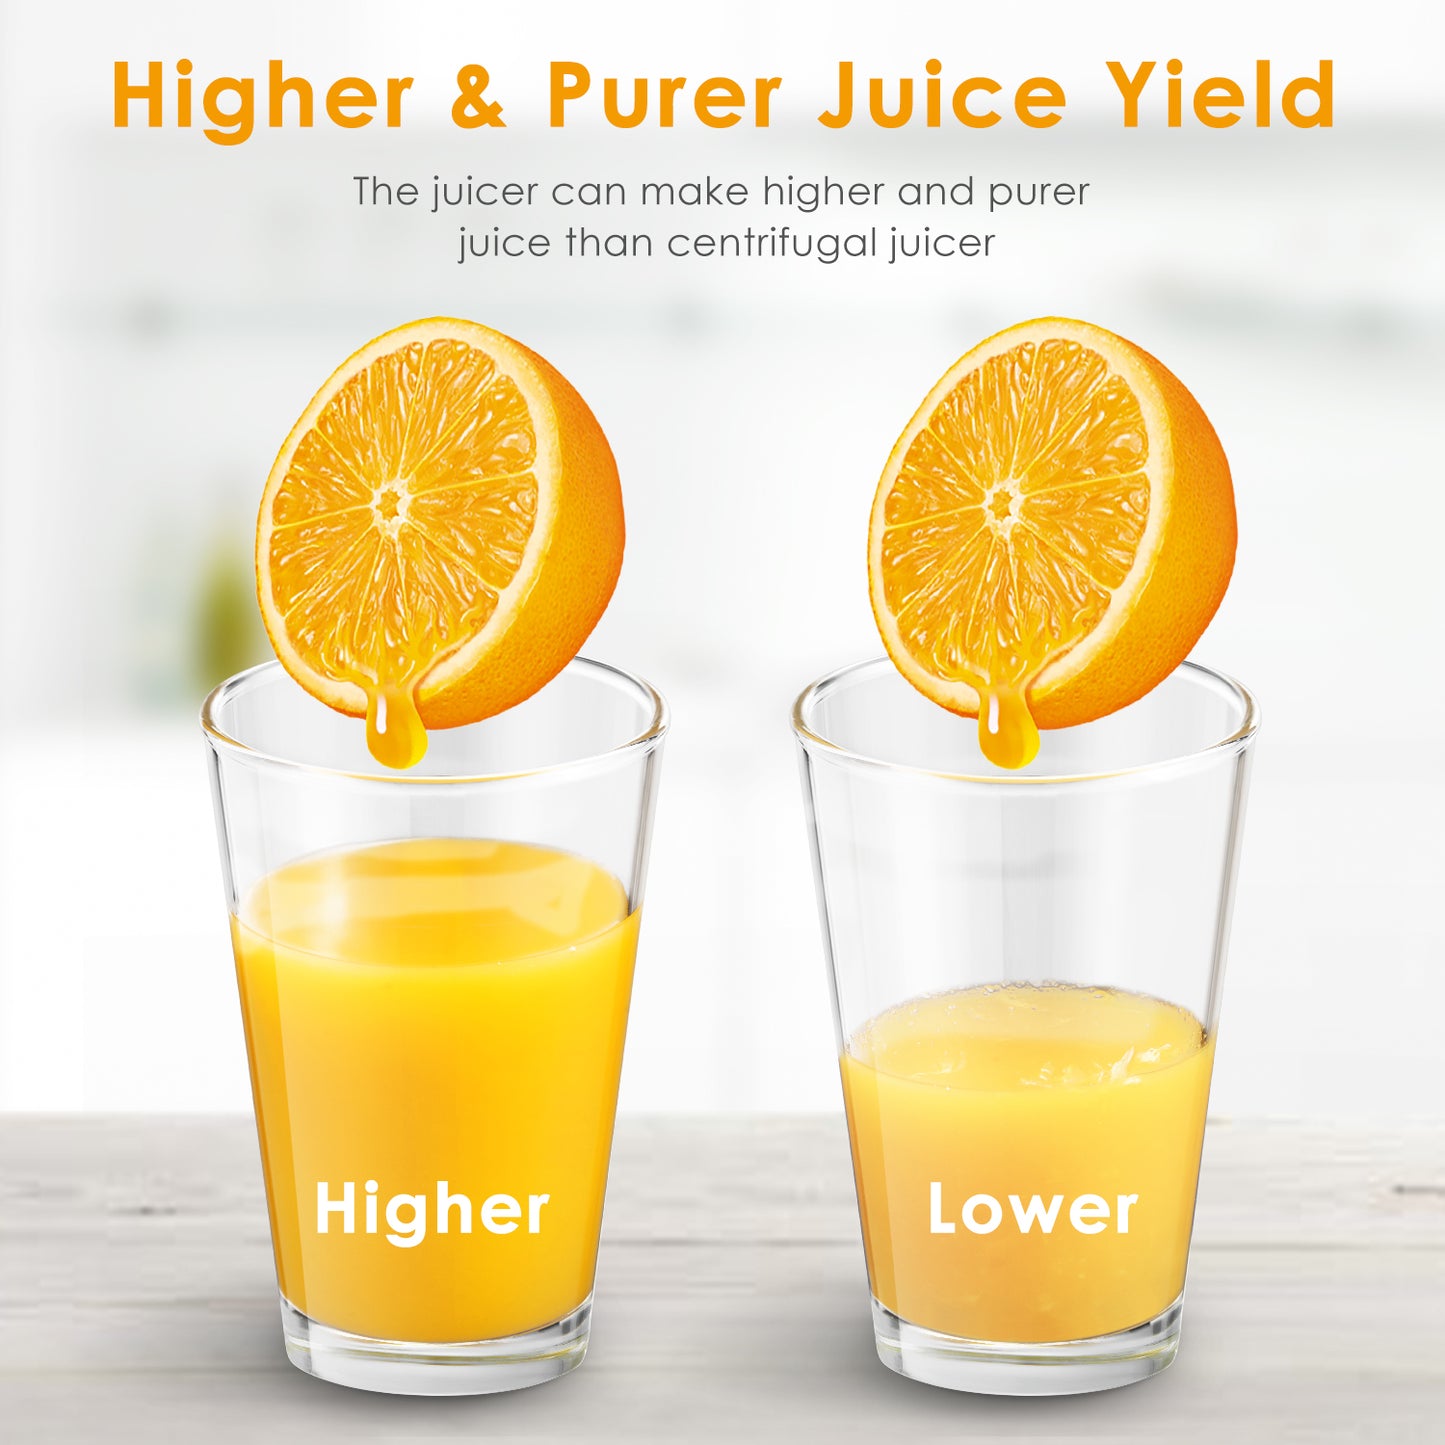 AICOK-Juicer, Masticating Juice Extractor Cold Press Juicer 519, higher, purer juice yield, orange juice, delicious juice